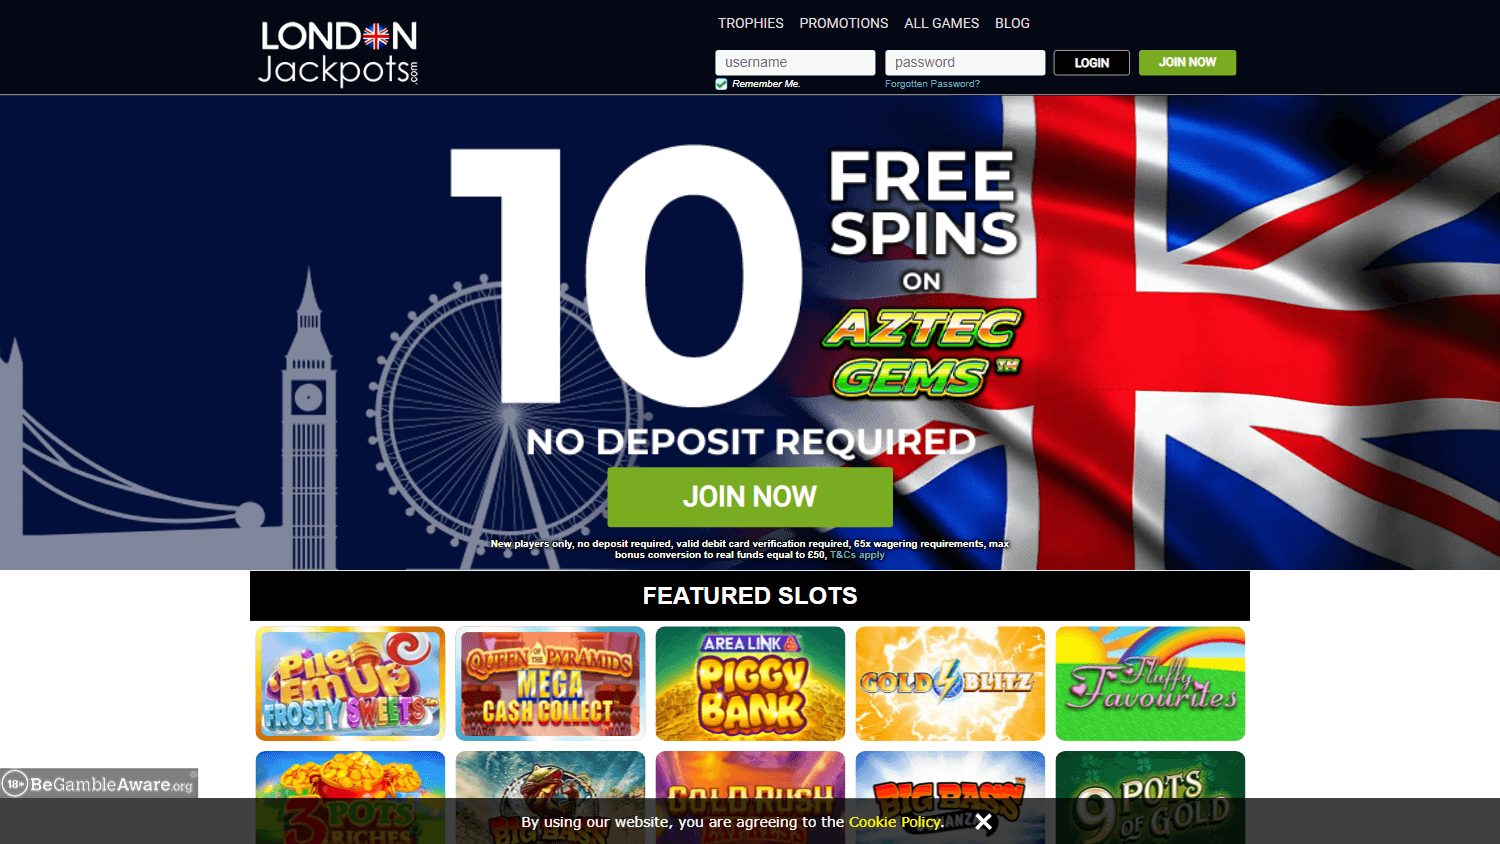 london_jackpots_casino_homepage_desktop